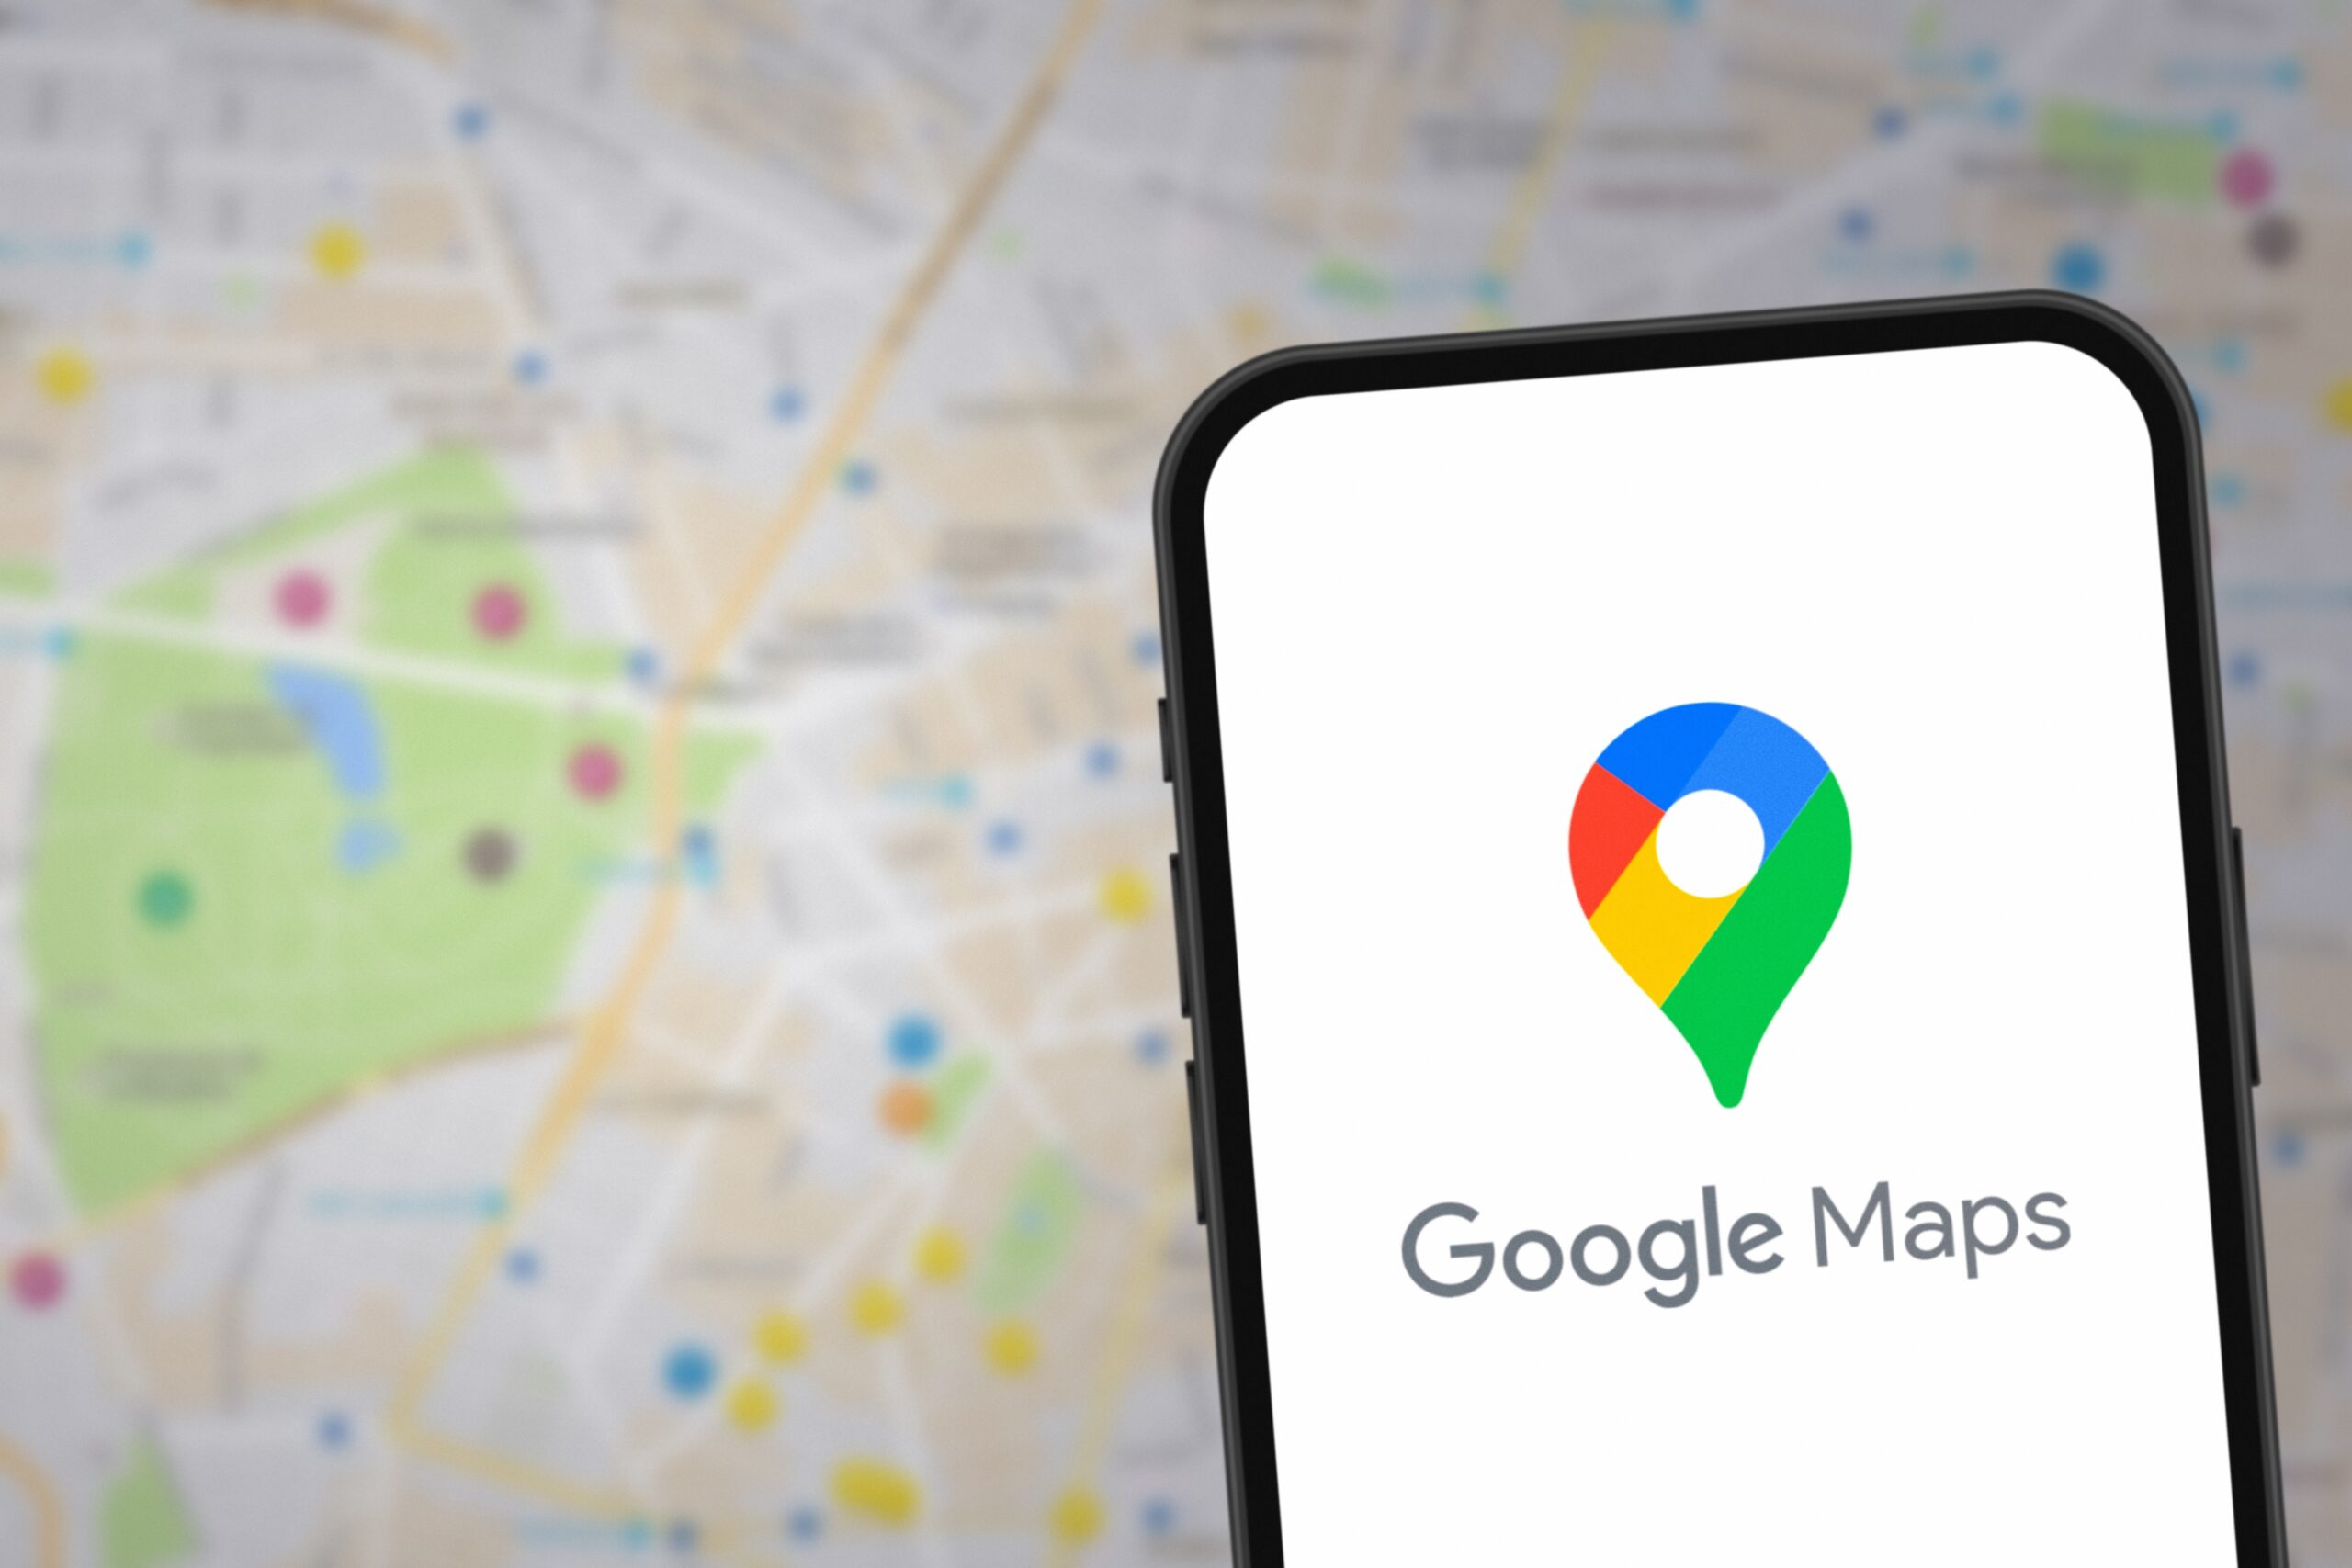 Ekran smartfona z logo Google Maps na tle rozmytej mapy.